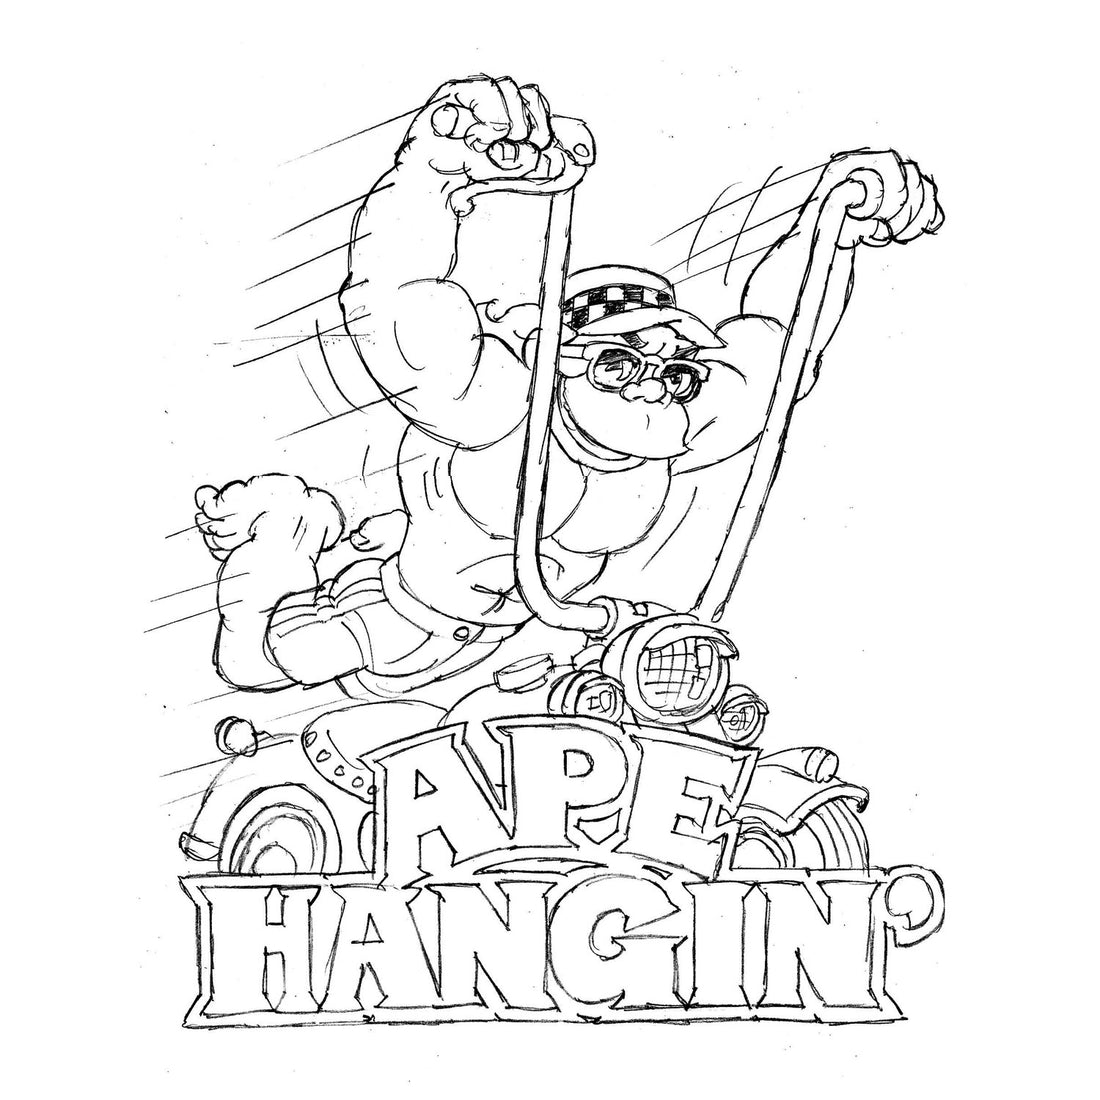 STEVE NAZAR'S DAILY DOODLE 6.1.18 - "Ape Hangin'"